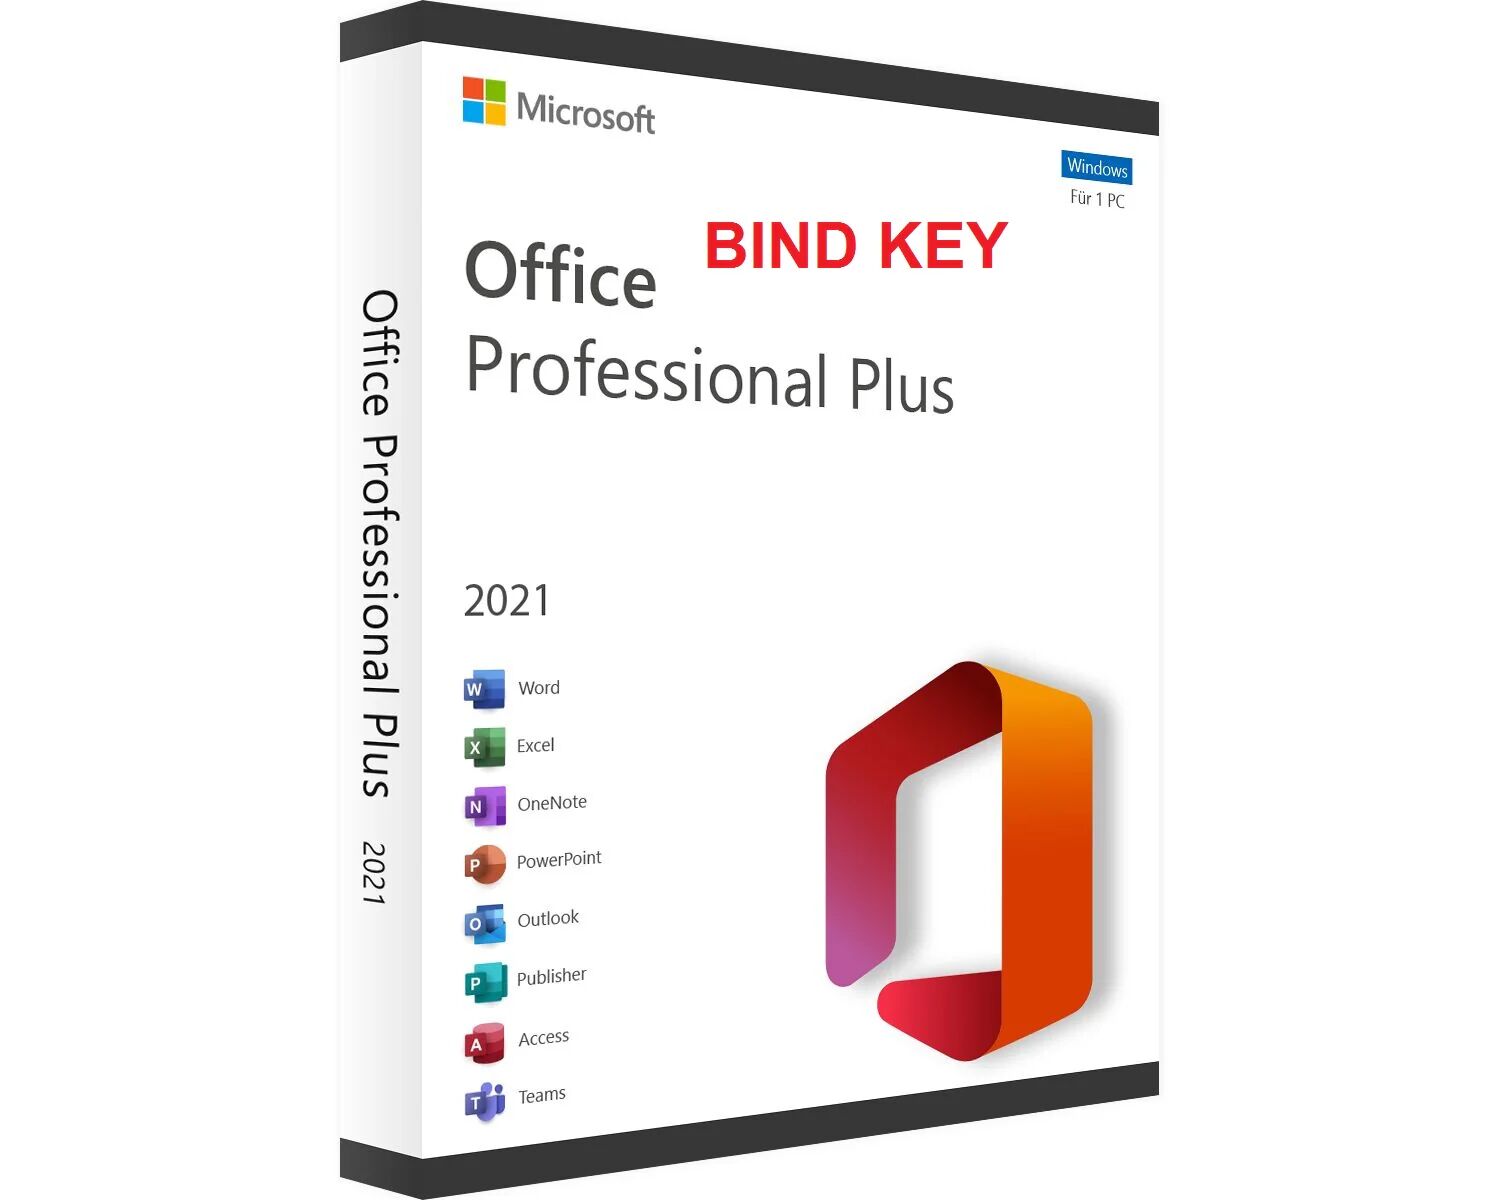 Microsoft OFFICE 2021 PROFESSIONAL PLUS 32/64 BIT BIND KEY ESD